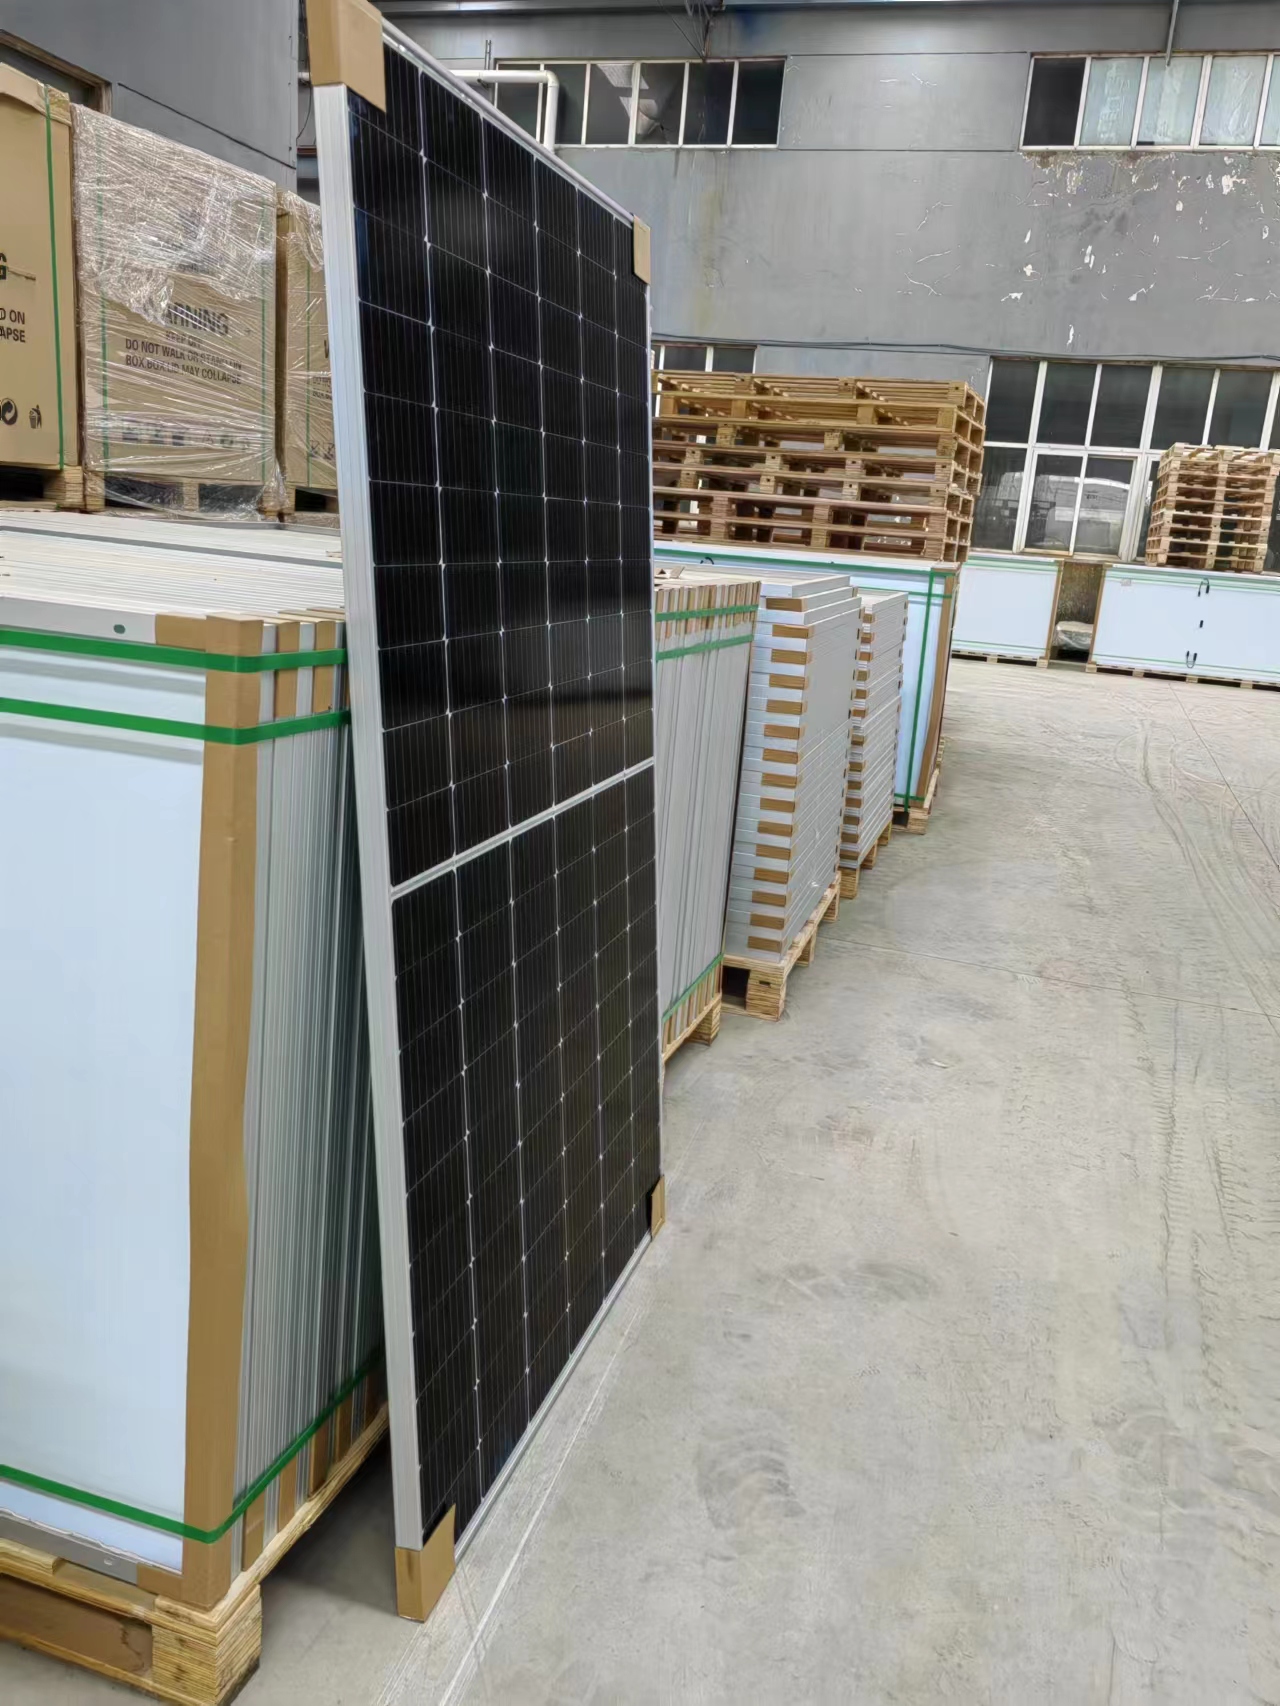 460W Solar Panel For Solar System Home Green Energy 